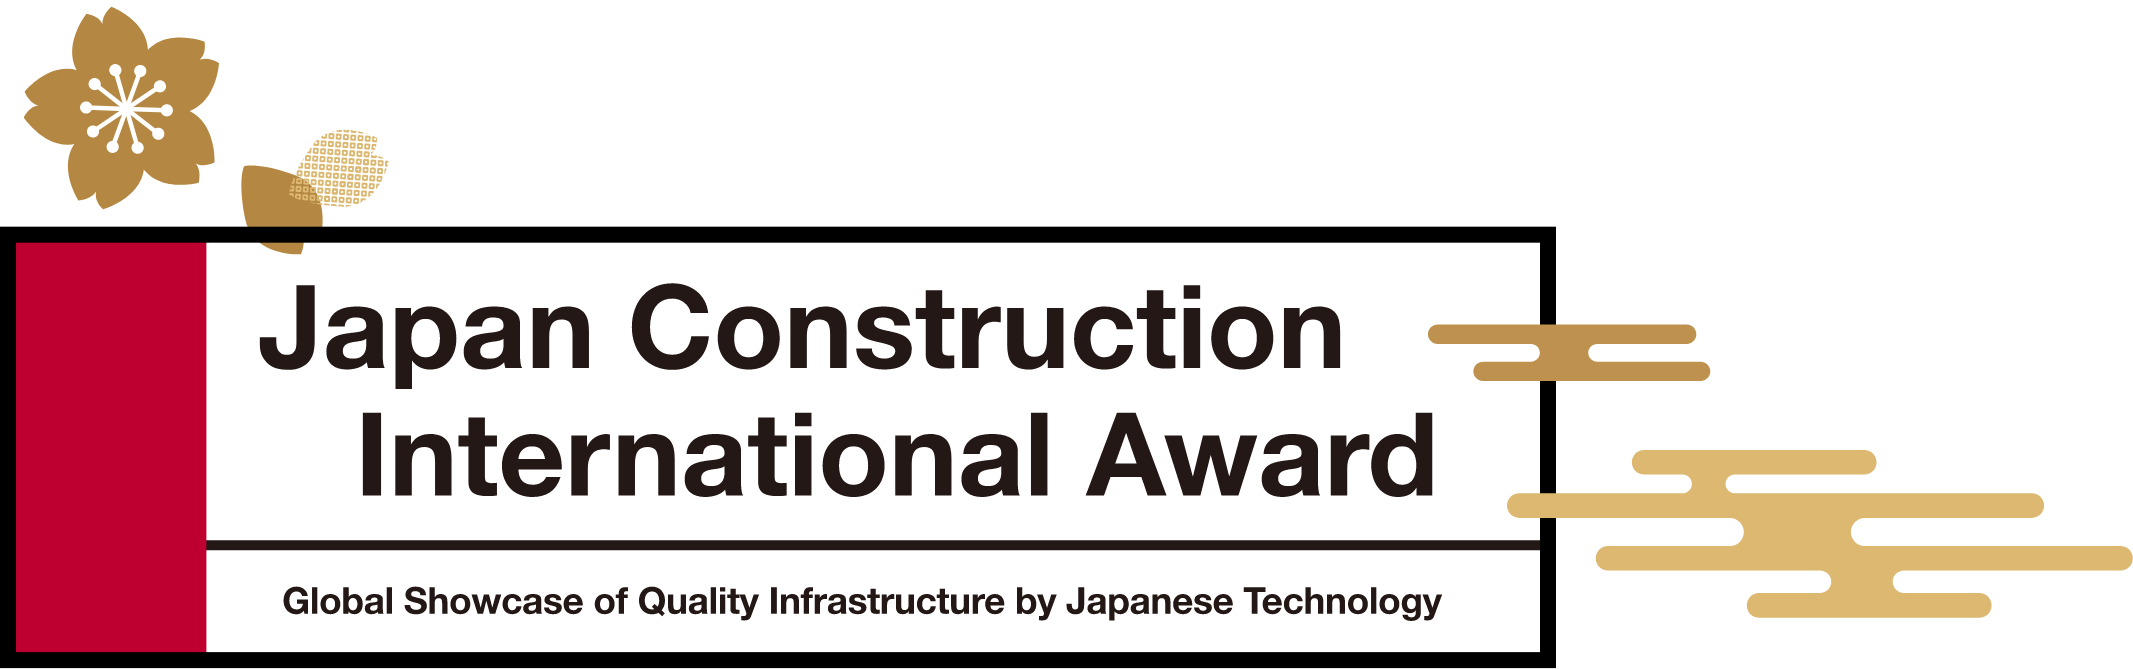 Japan Construction International Award